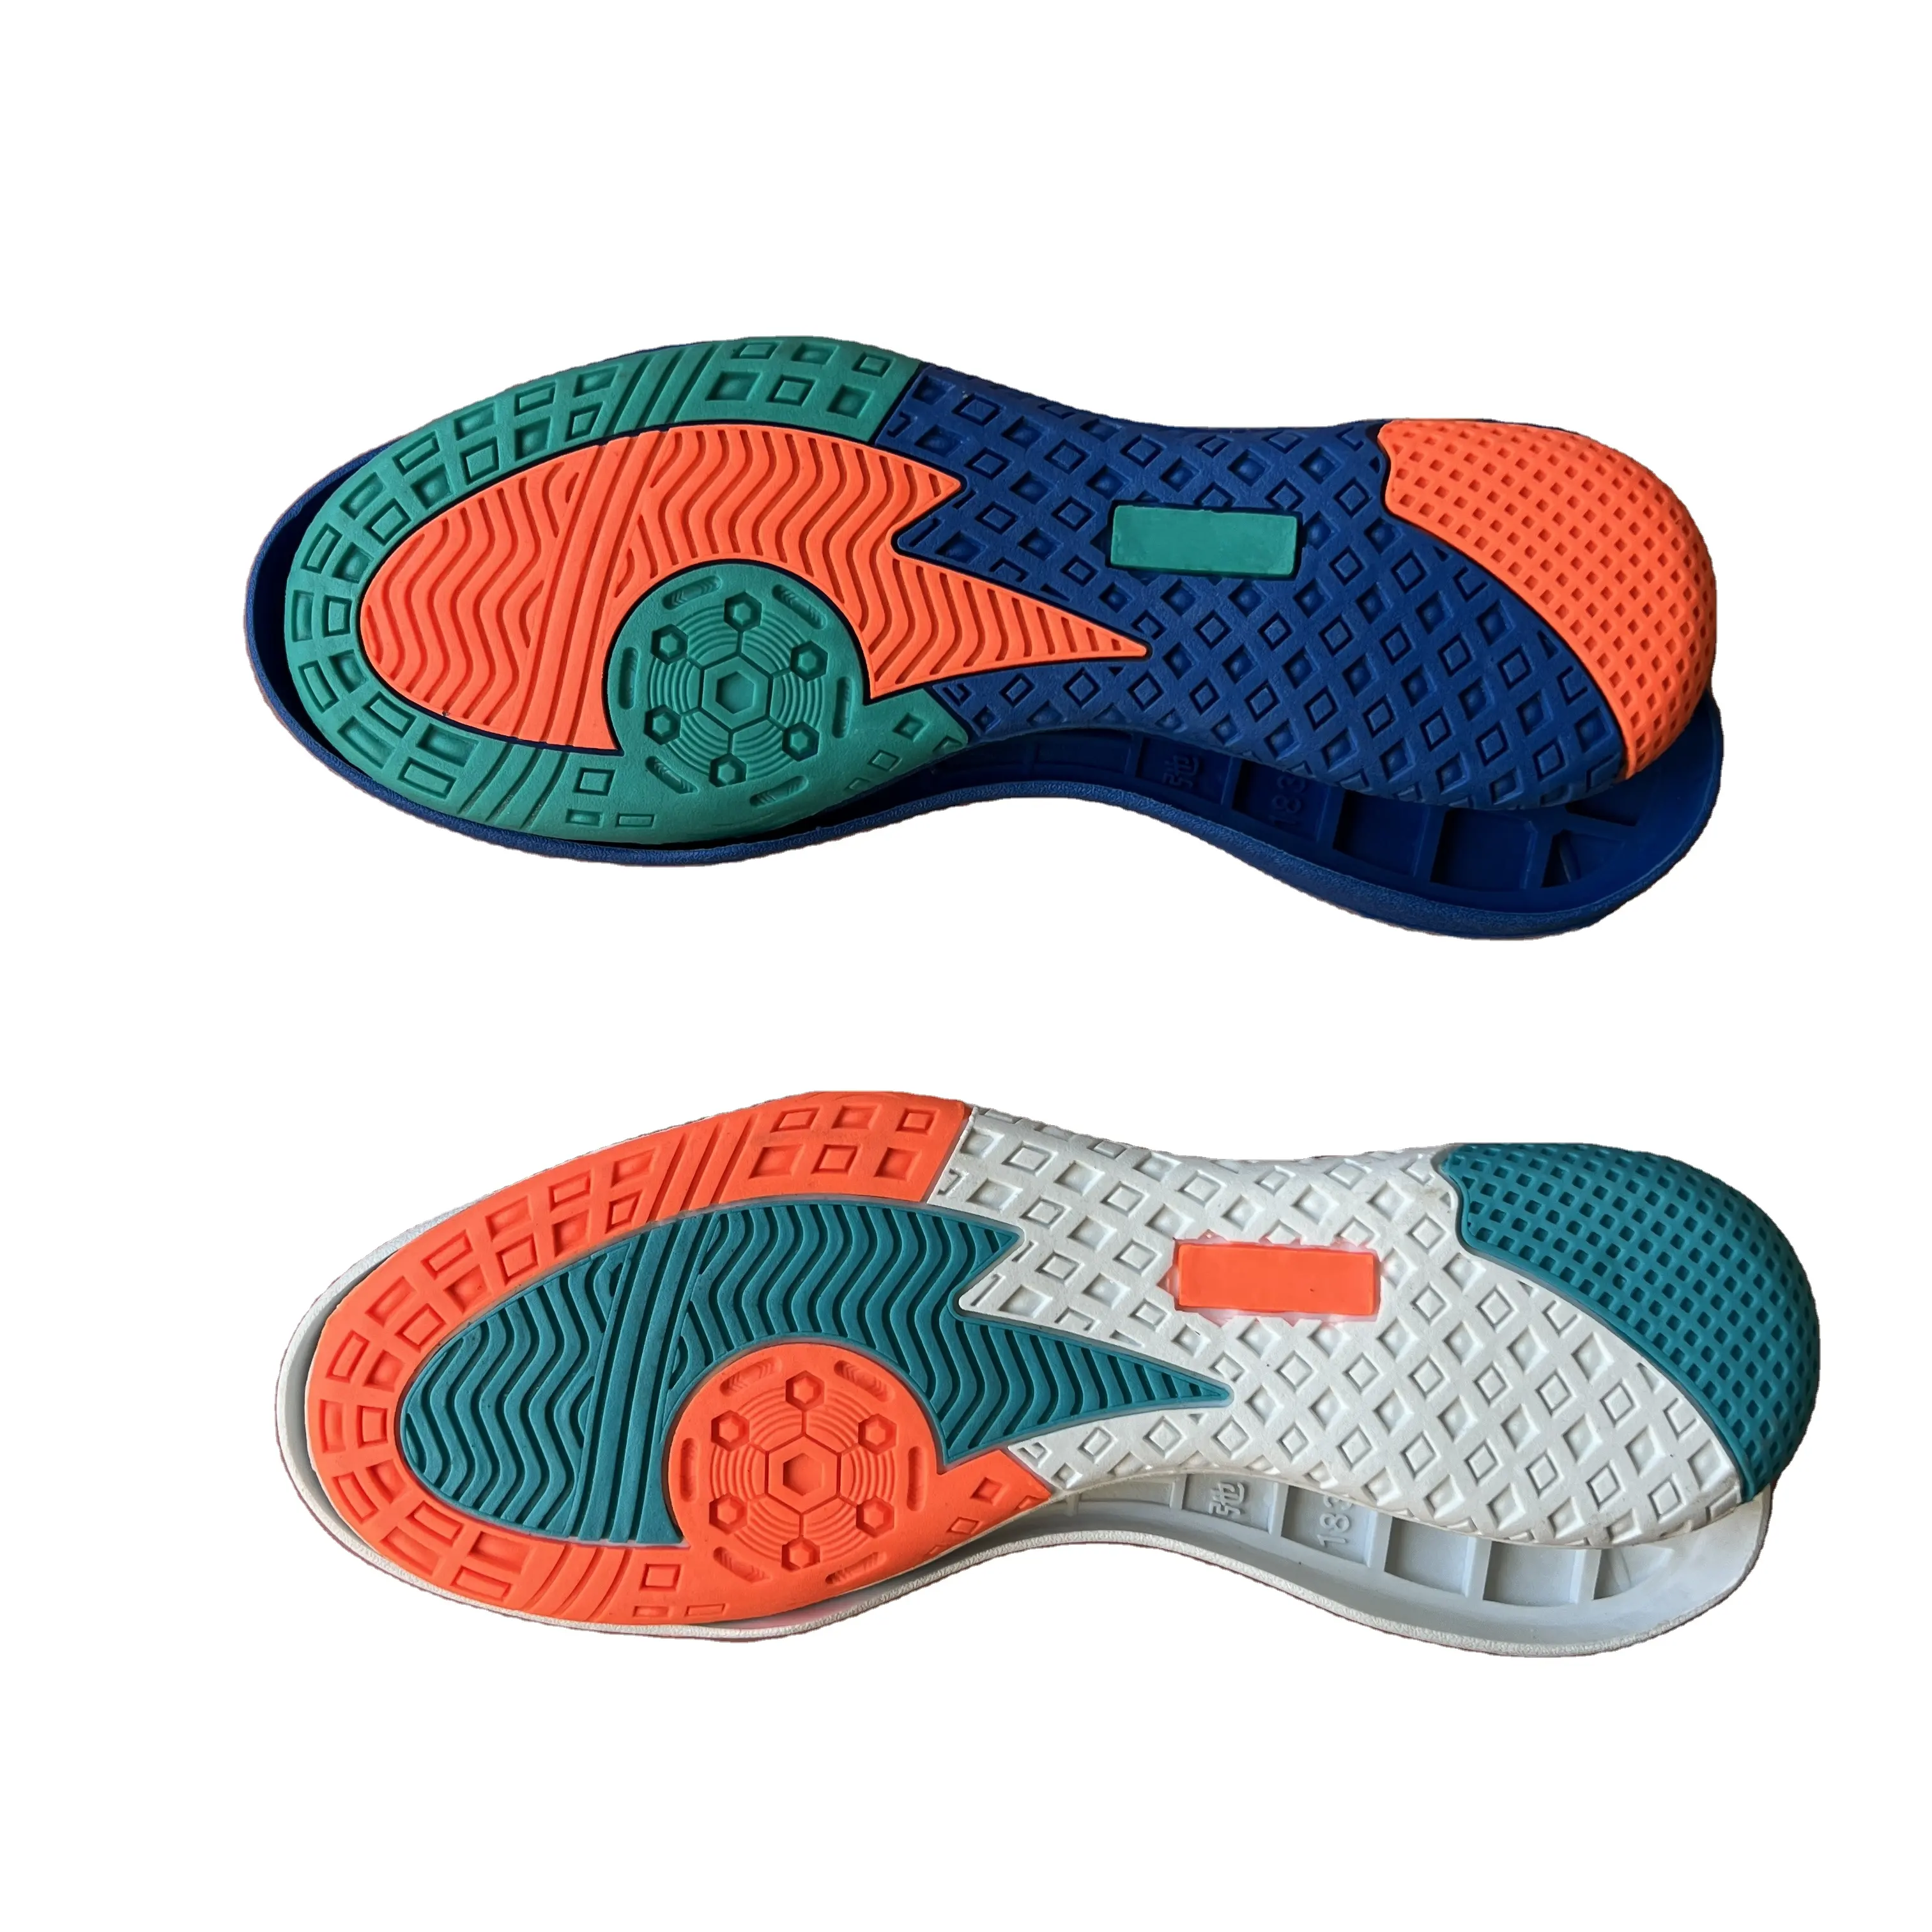 Kick Ground Suela De Zapato TPr Football Shoe Outsole recycled rubber soccer shoe sole for men